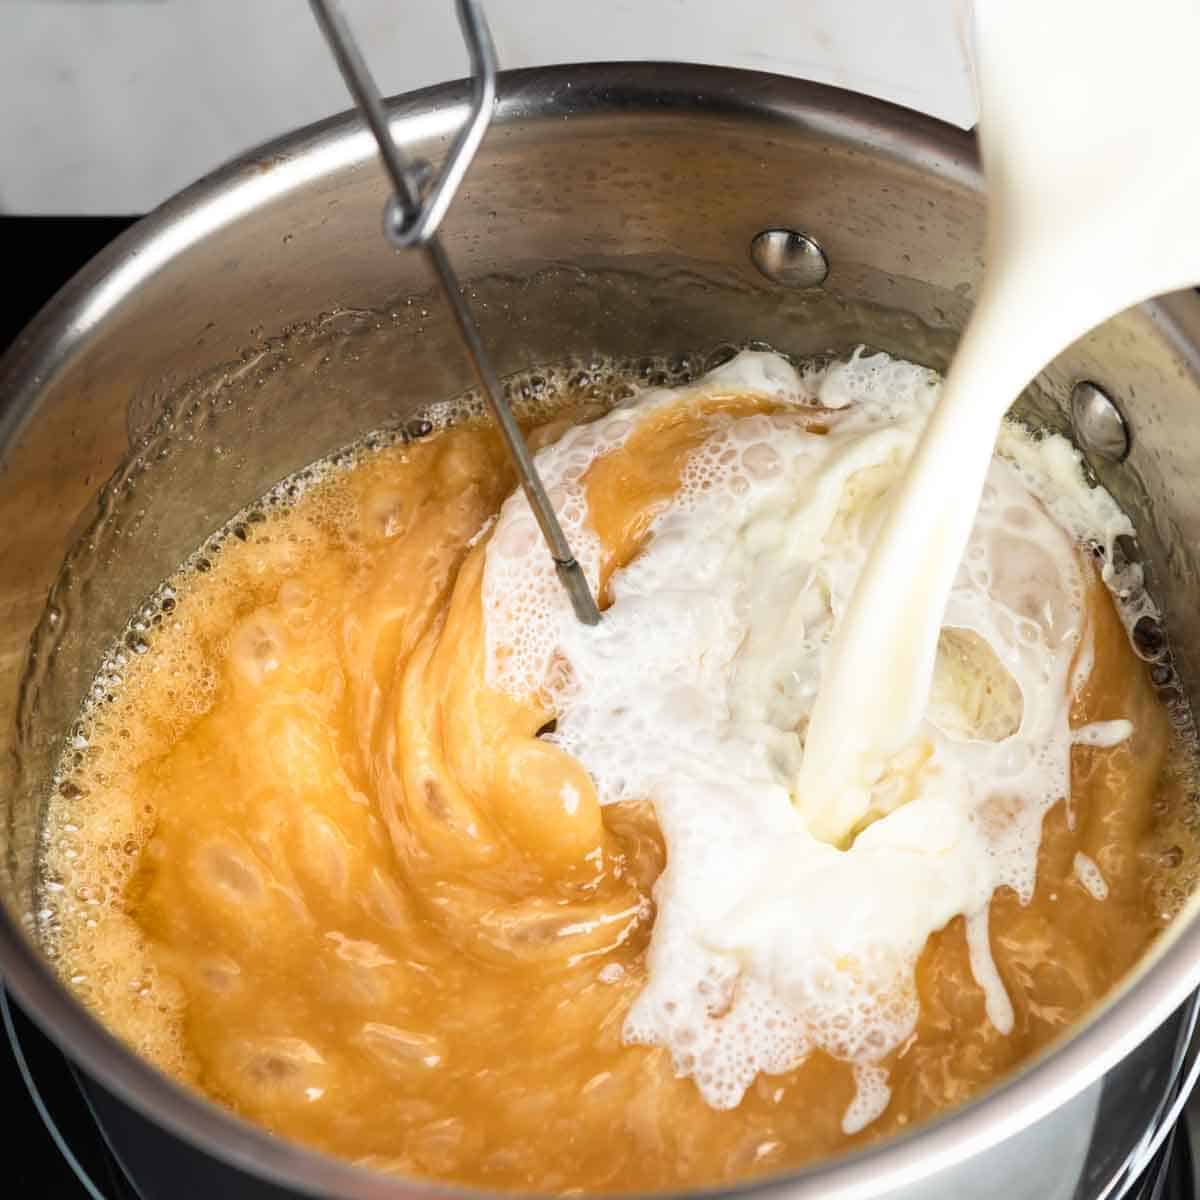 Whisking cream into bubbling caramel sauce